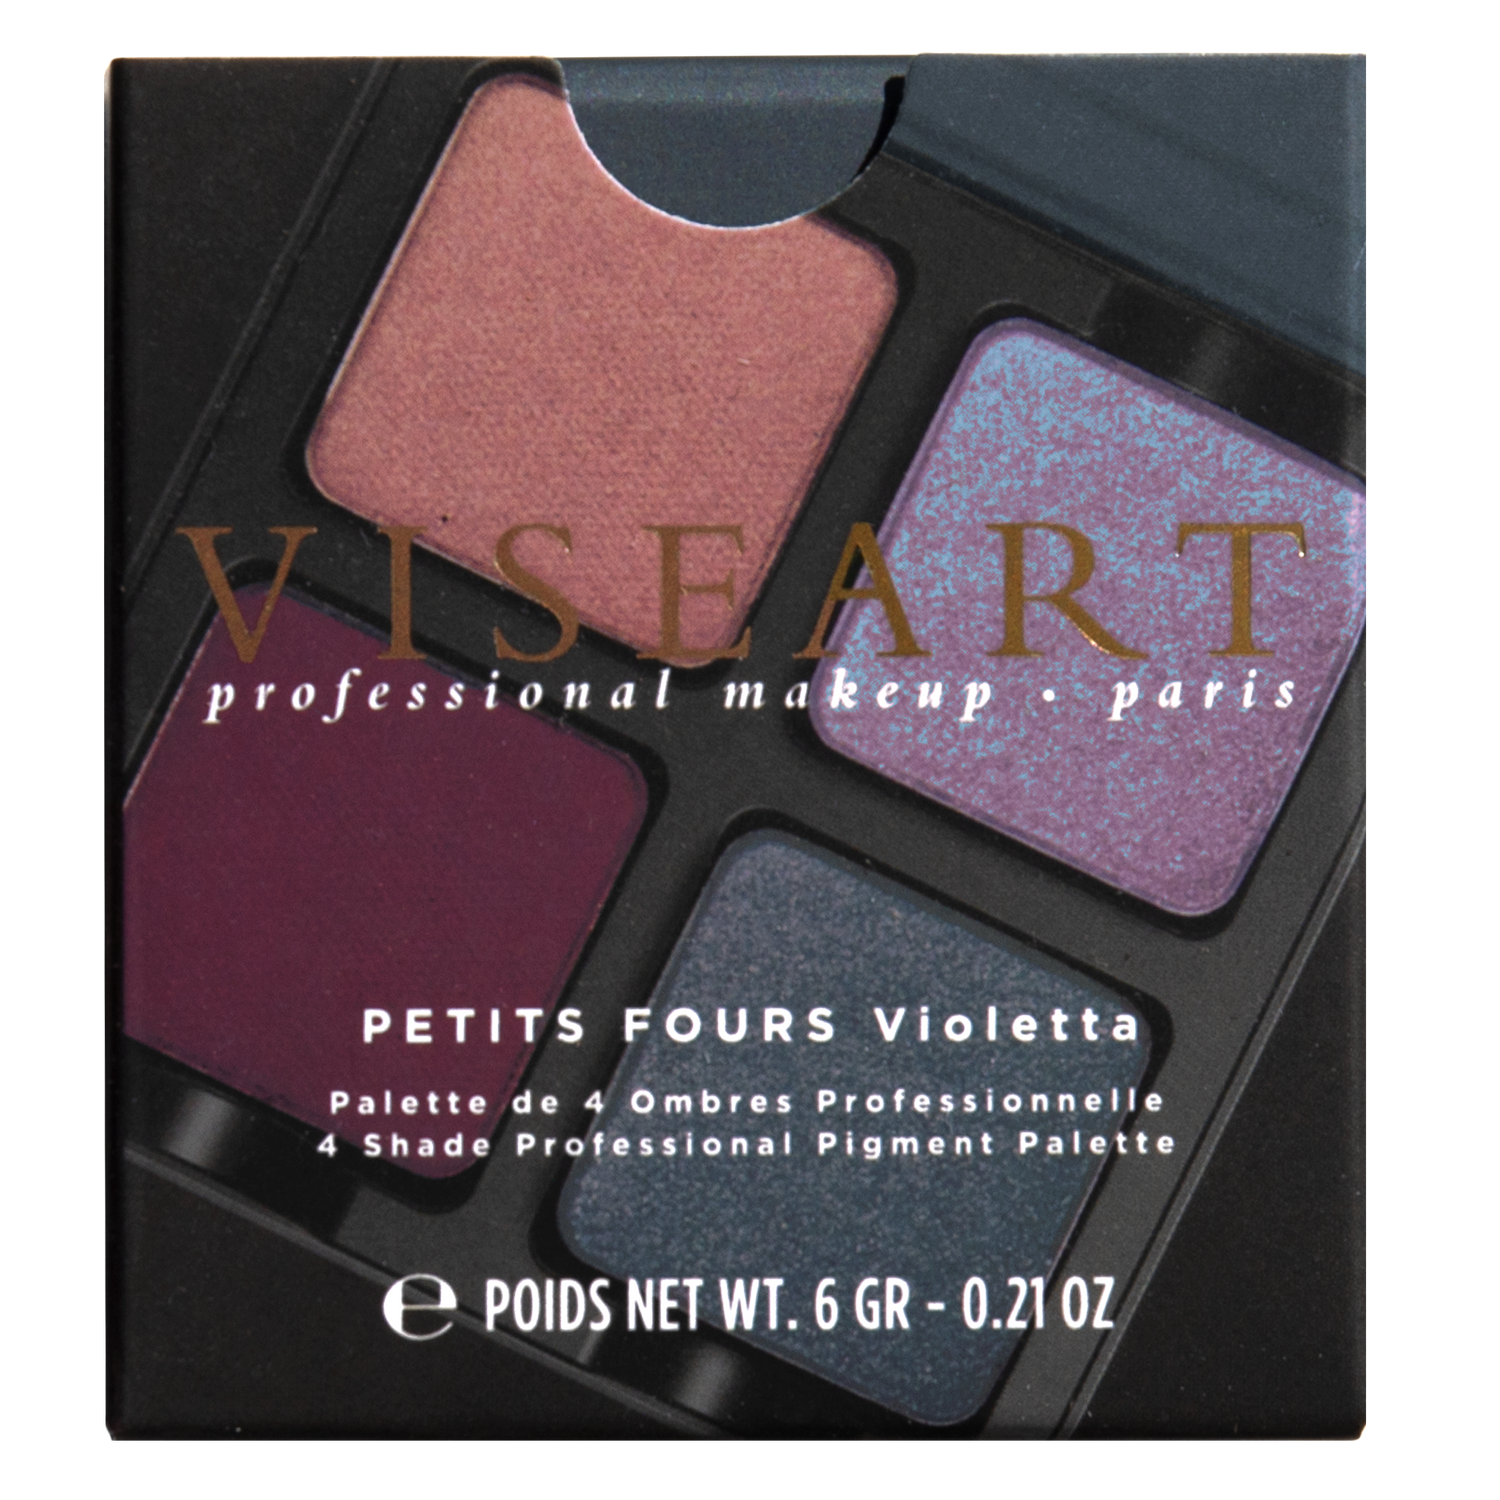 Viseart Paris Petits Fours Violetta Eyeshadow Palette Carton